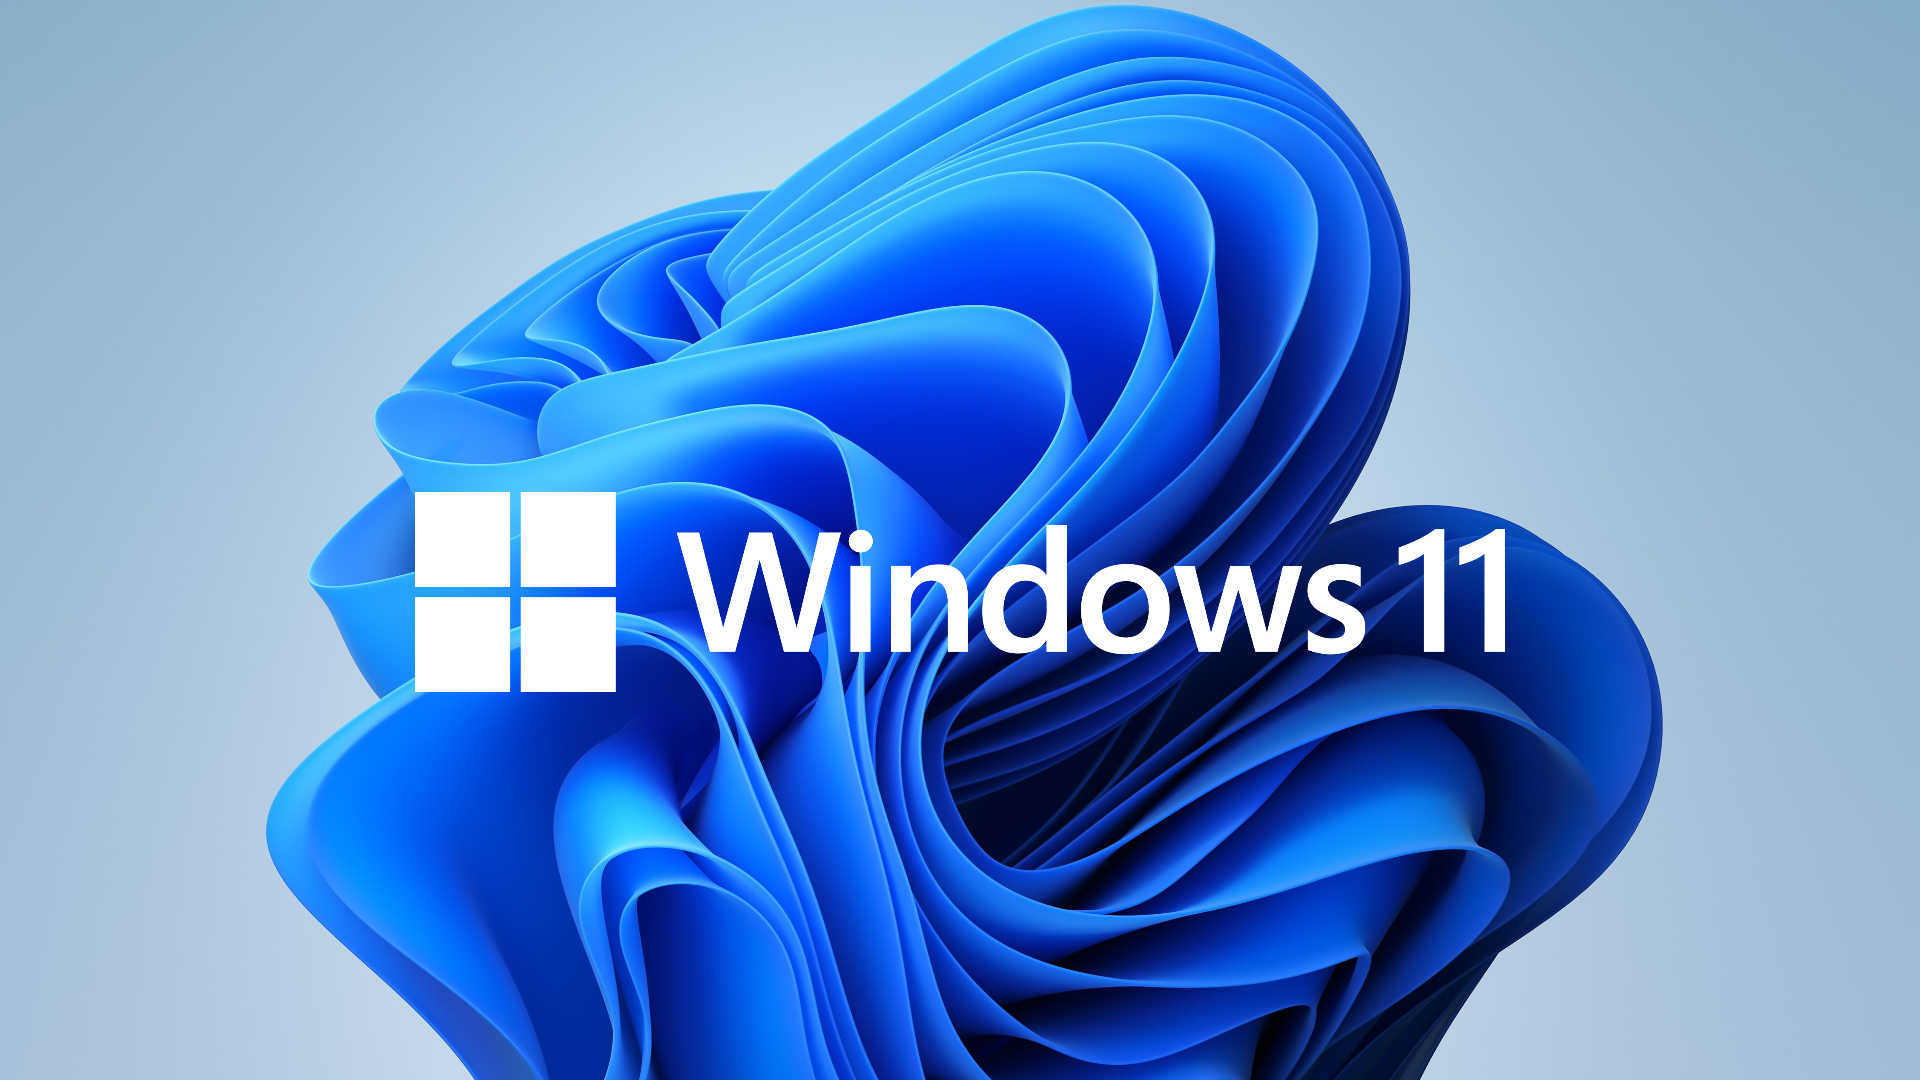 Windows 11 logo with background